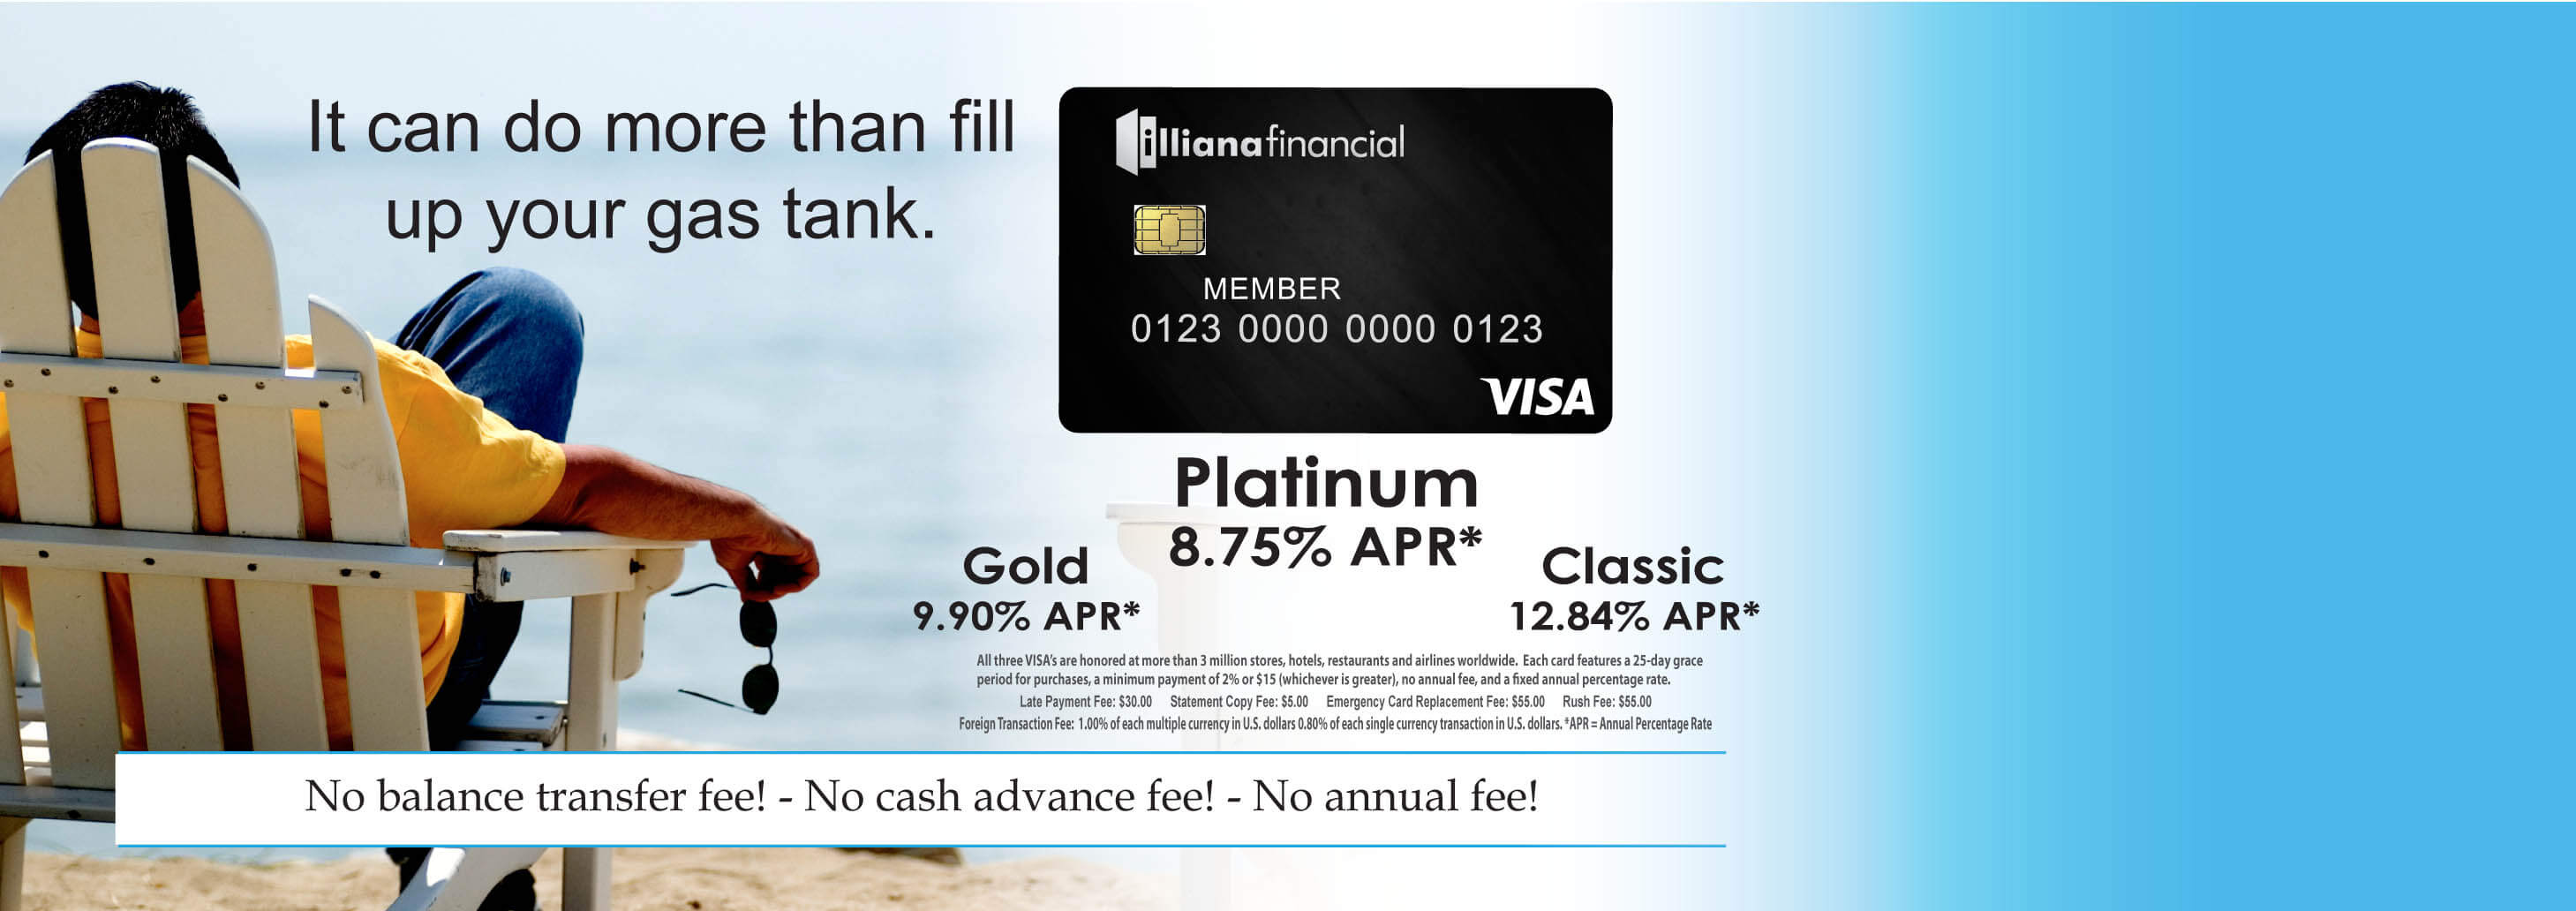 Illiana Financial VISA credit card. It can do more than fill up your gas tank. Gold 9.90% APR. Platinum 8.75% APR. Classic 12.84% APR. No balance transfer fee! No cash advance fee! No annual fee!